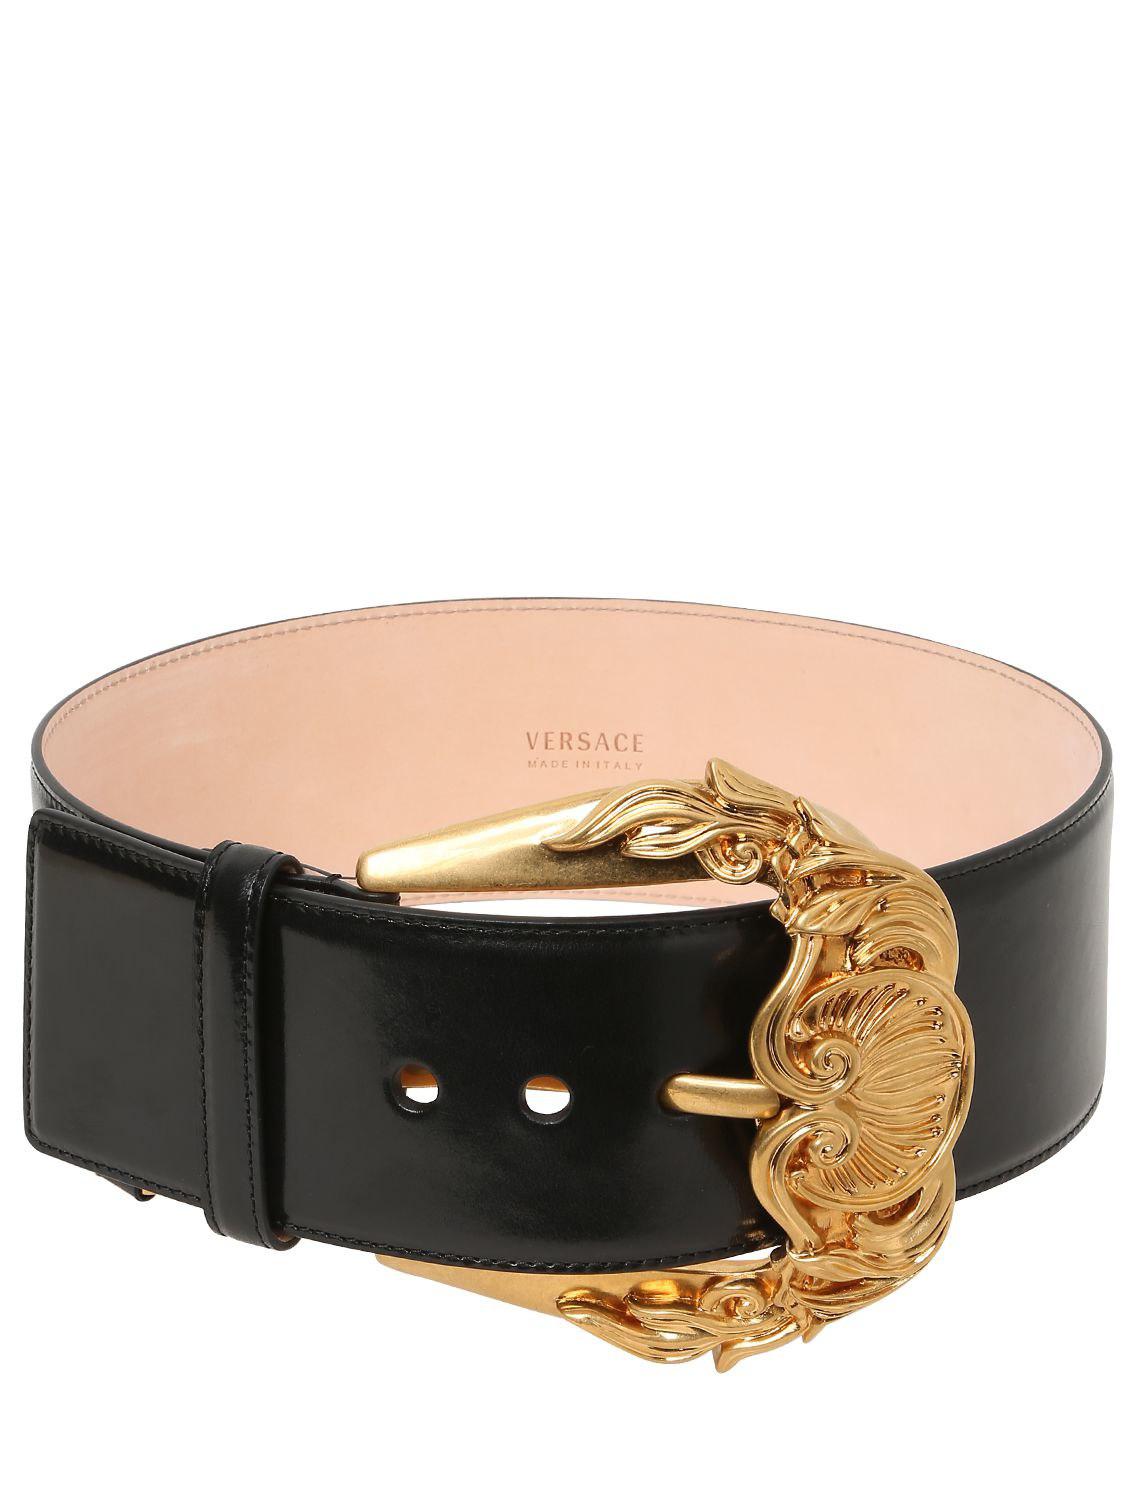 Versace 70mm Leather High Waist Belt in Black - Lyst